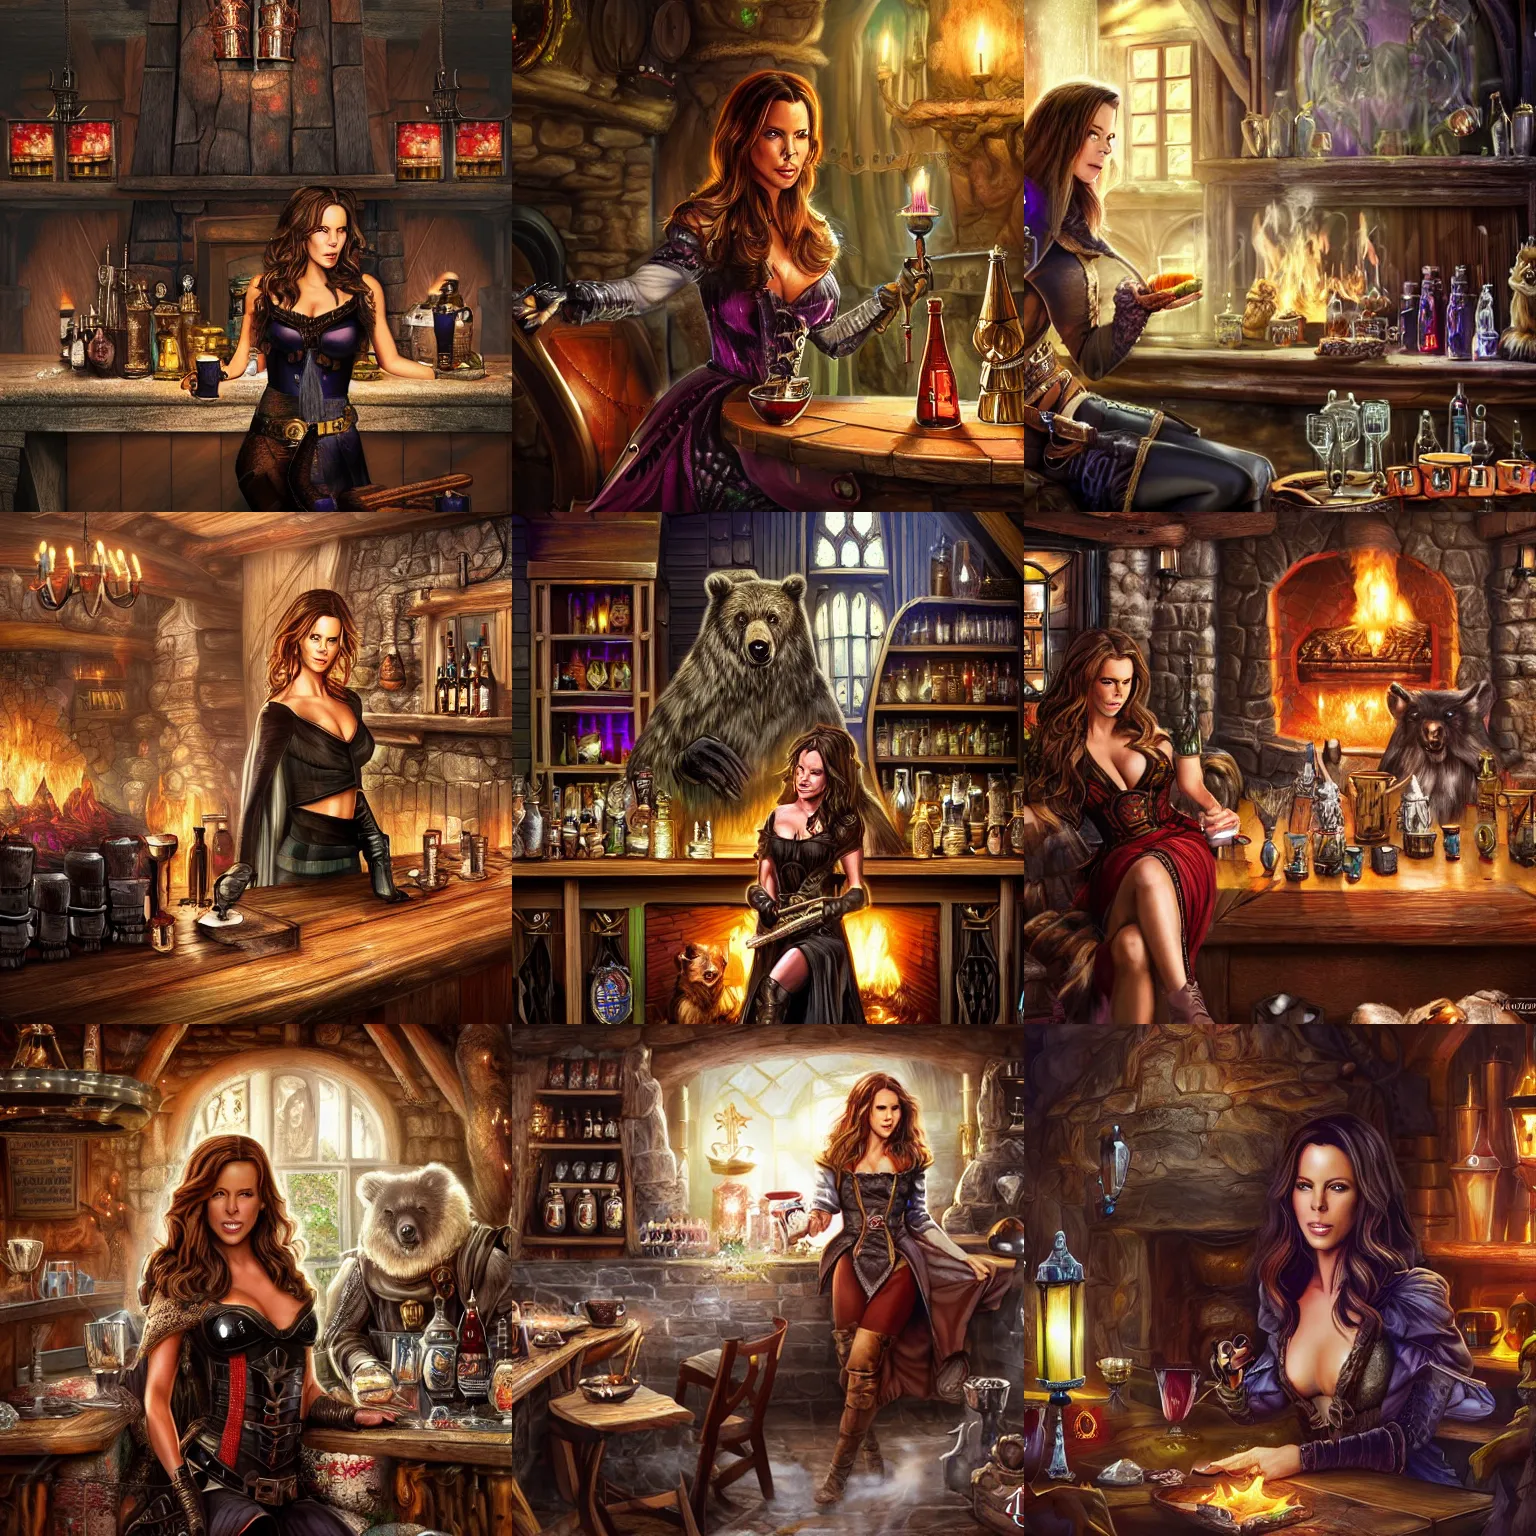 Prompt: kate beckinsale weared as warlock, sit in fantasy tavern near fireplace, behind bar deck with bear mugs, medieval dnd, colorfull digital fantasy art, 4k